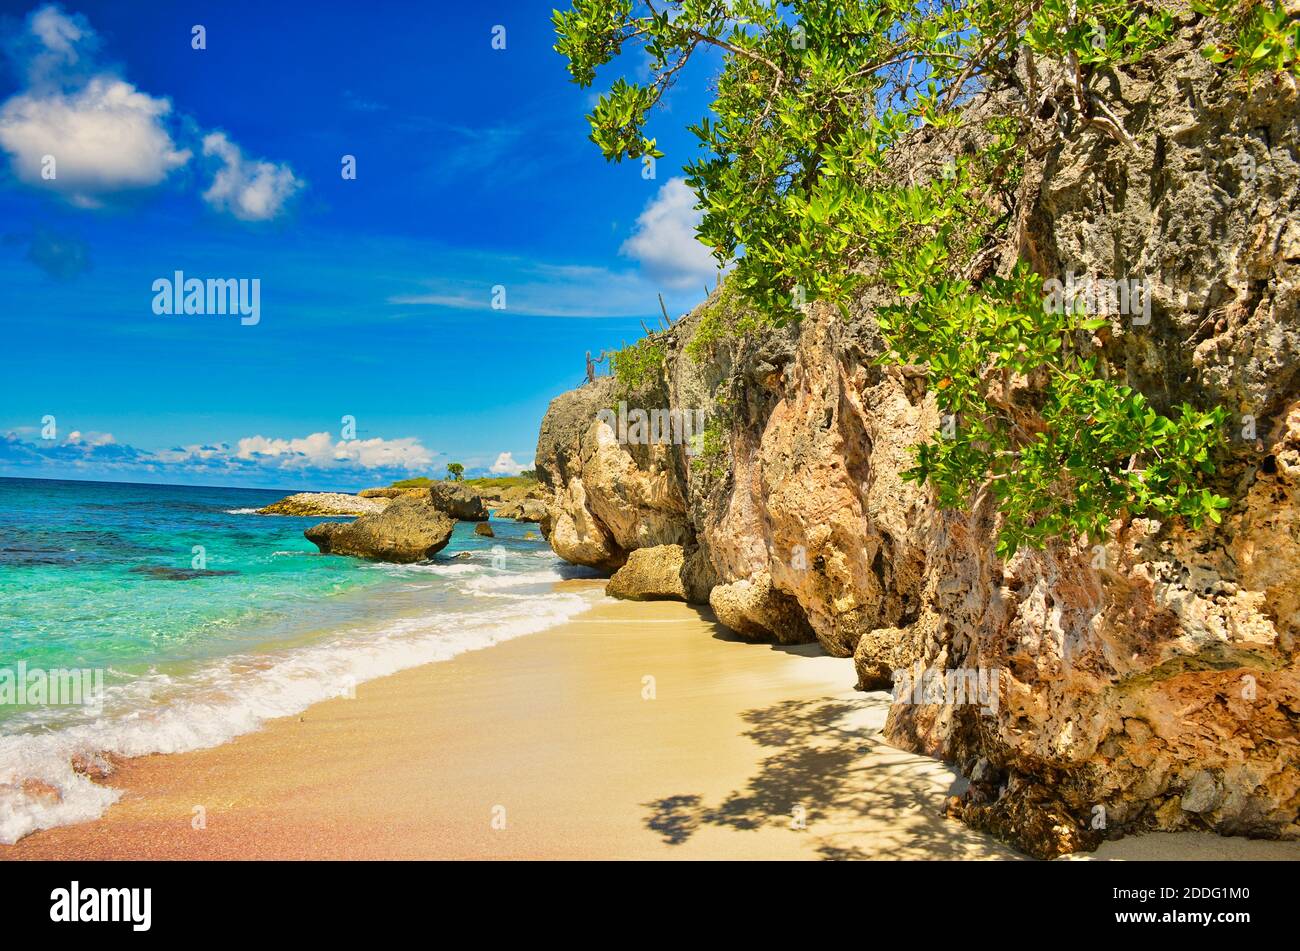 beautiful beach on the caribbean island of bonaire Stock Photo